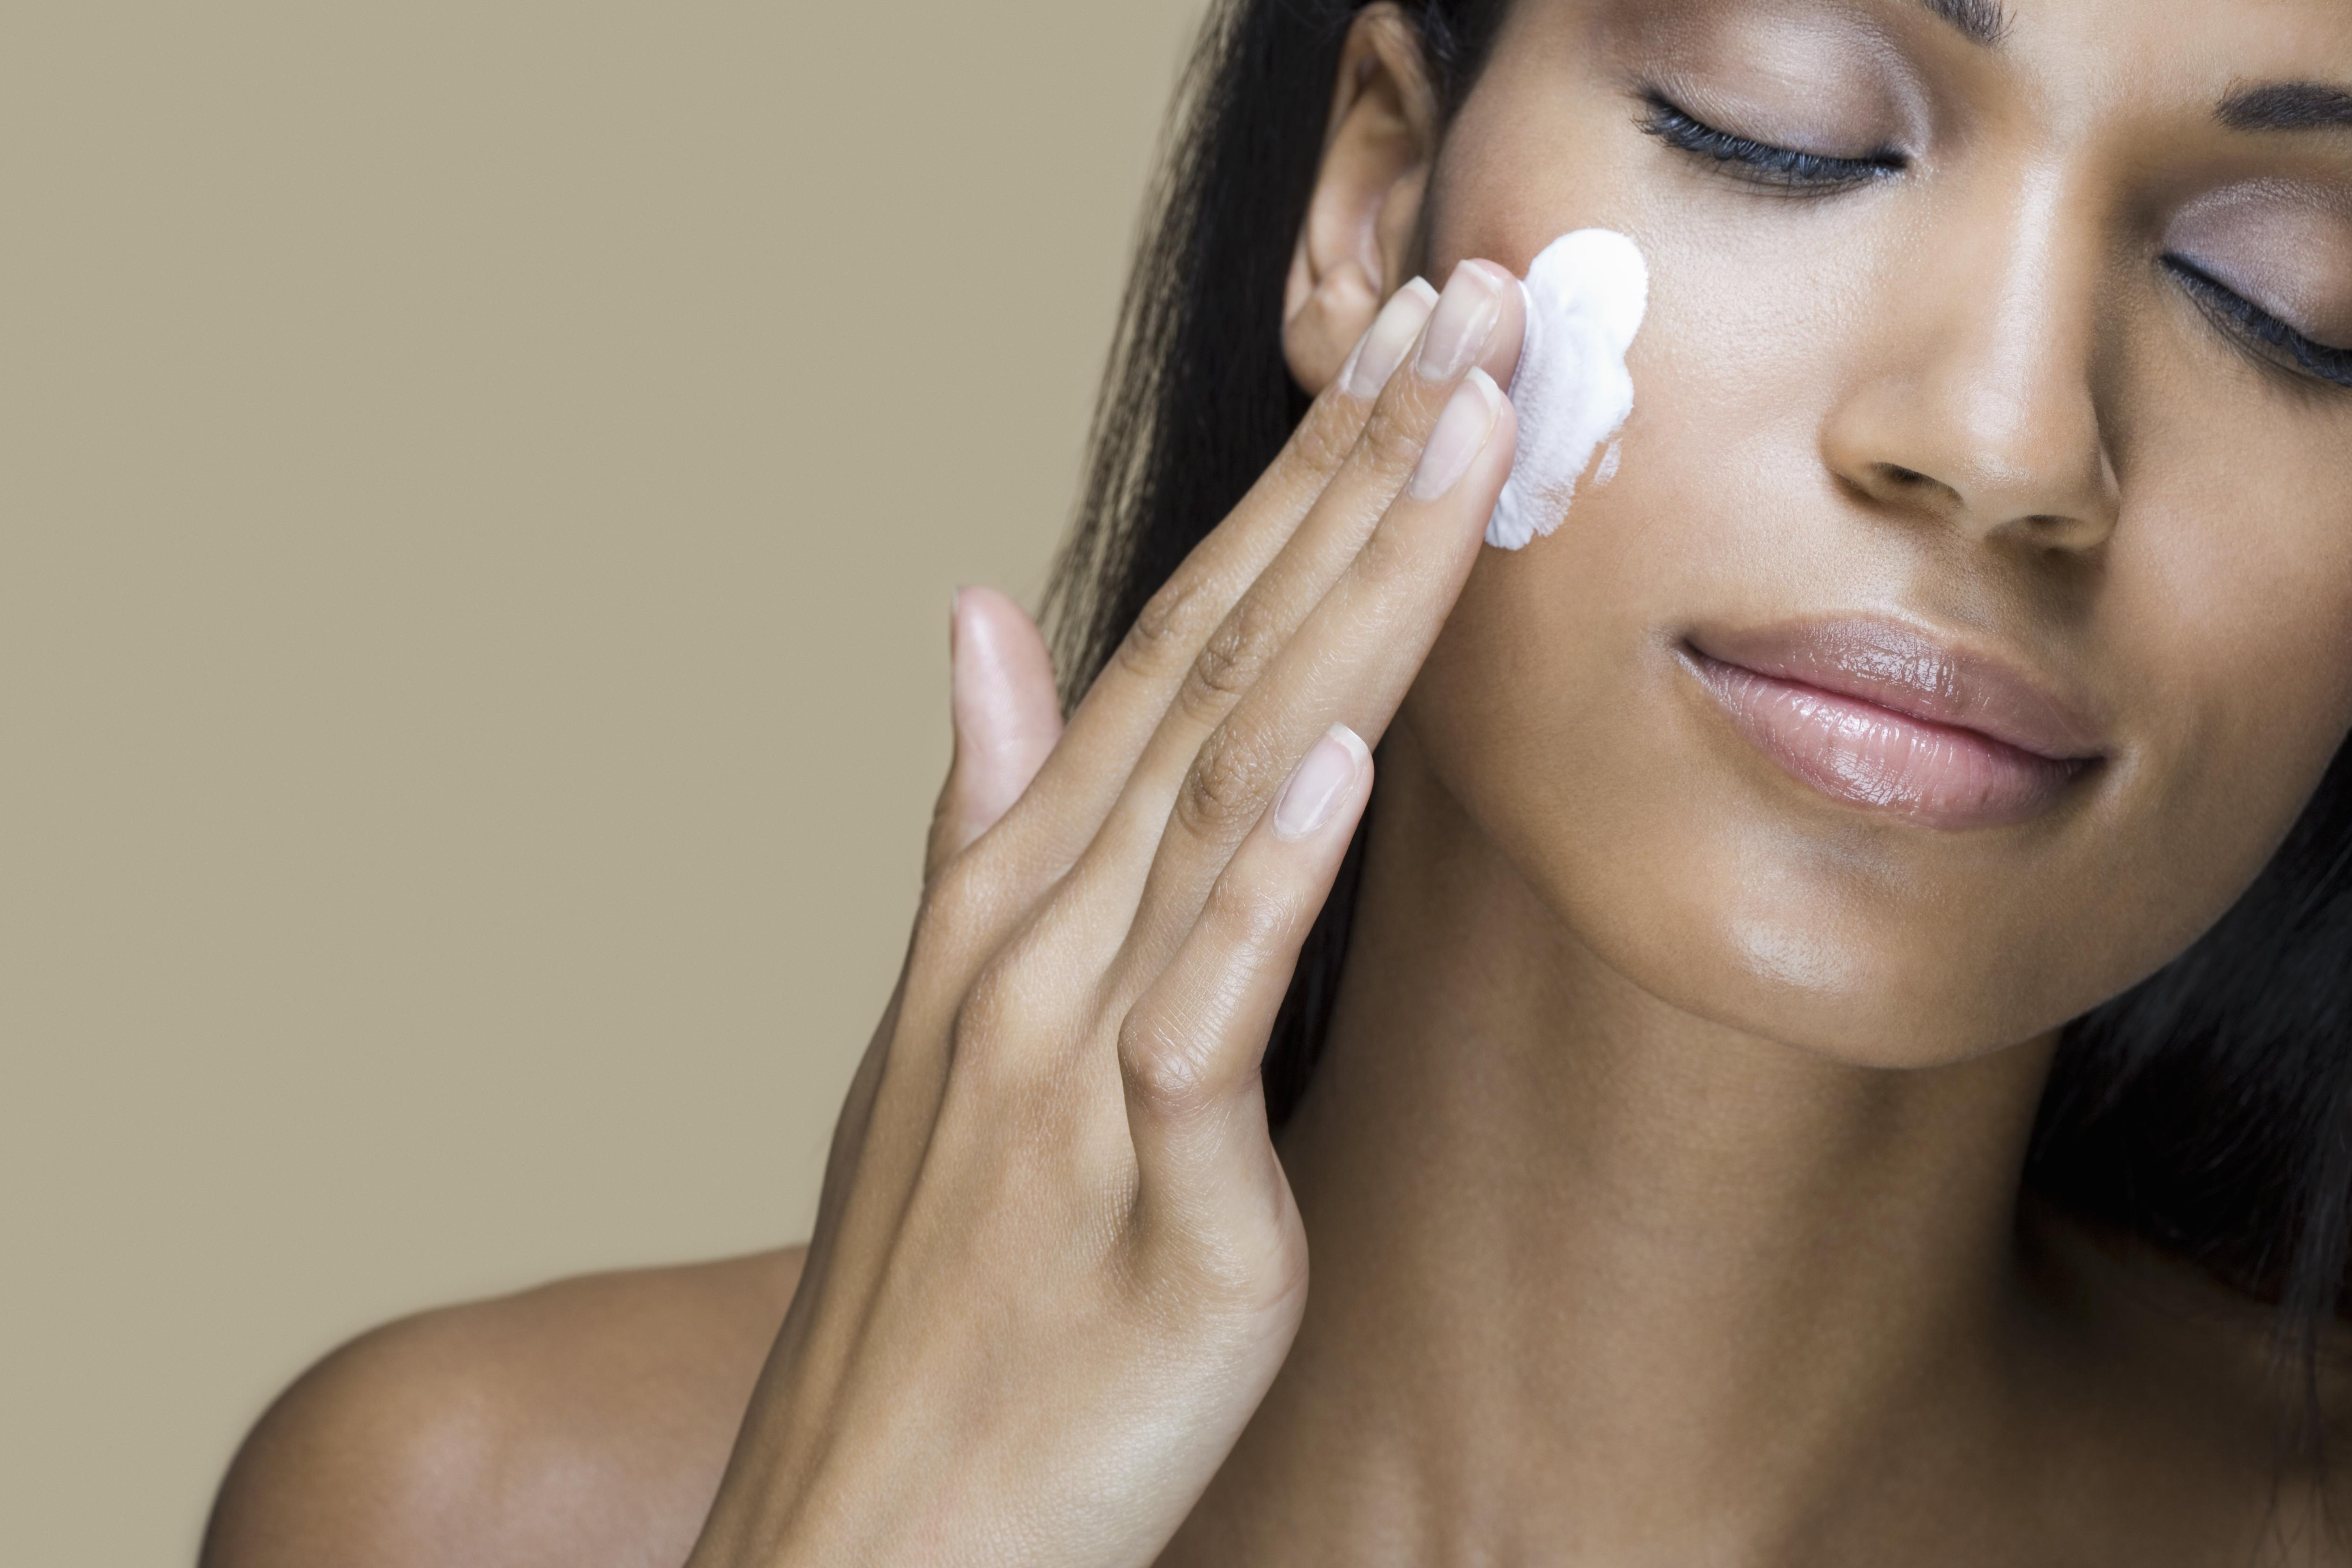 A woman rubbing moisturizer into her skin